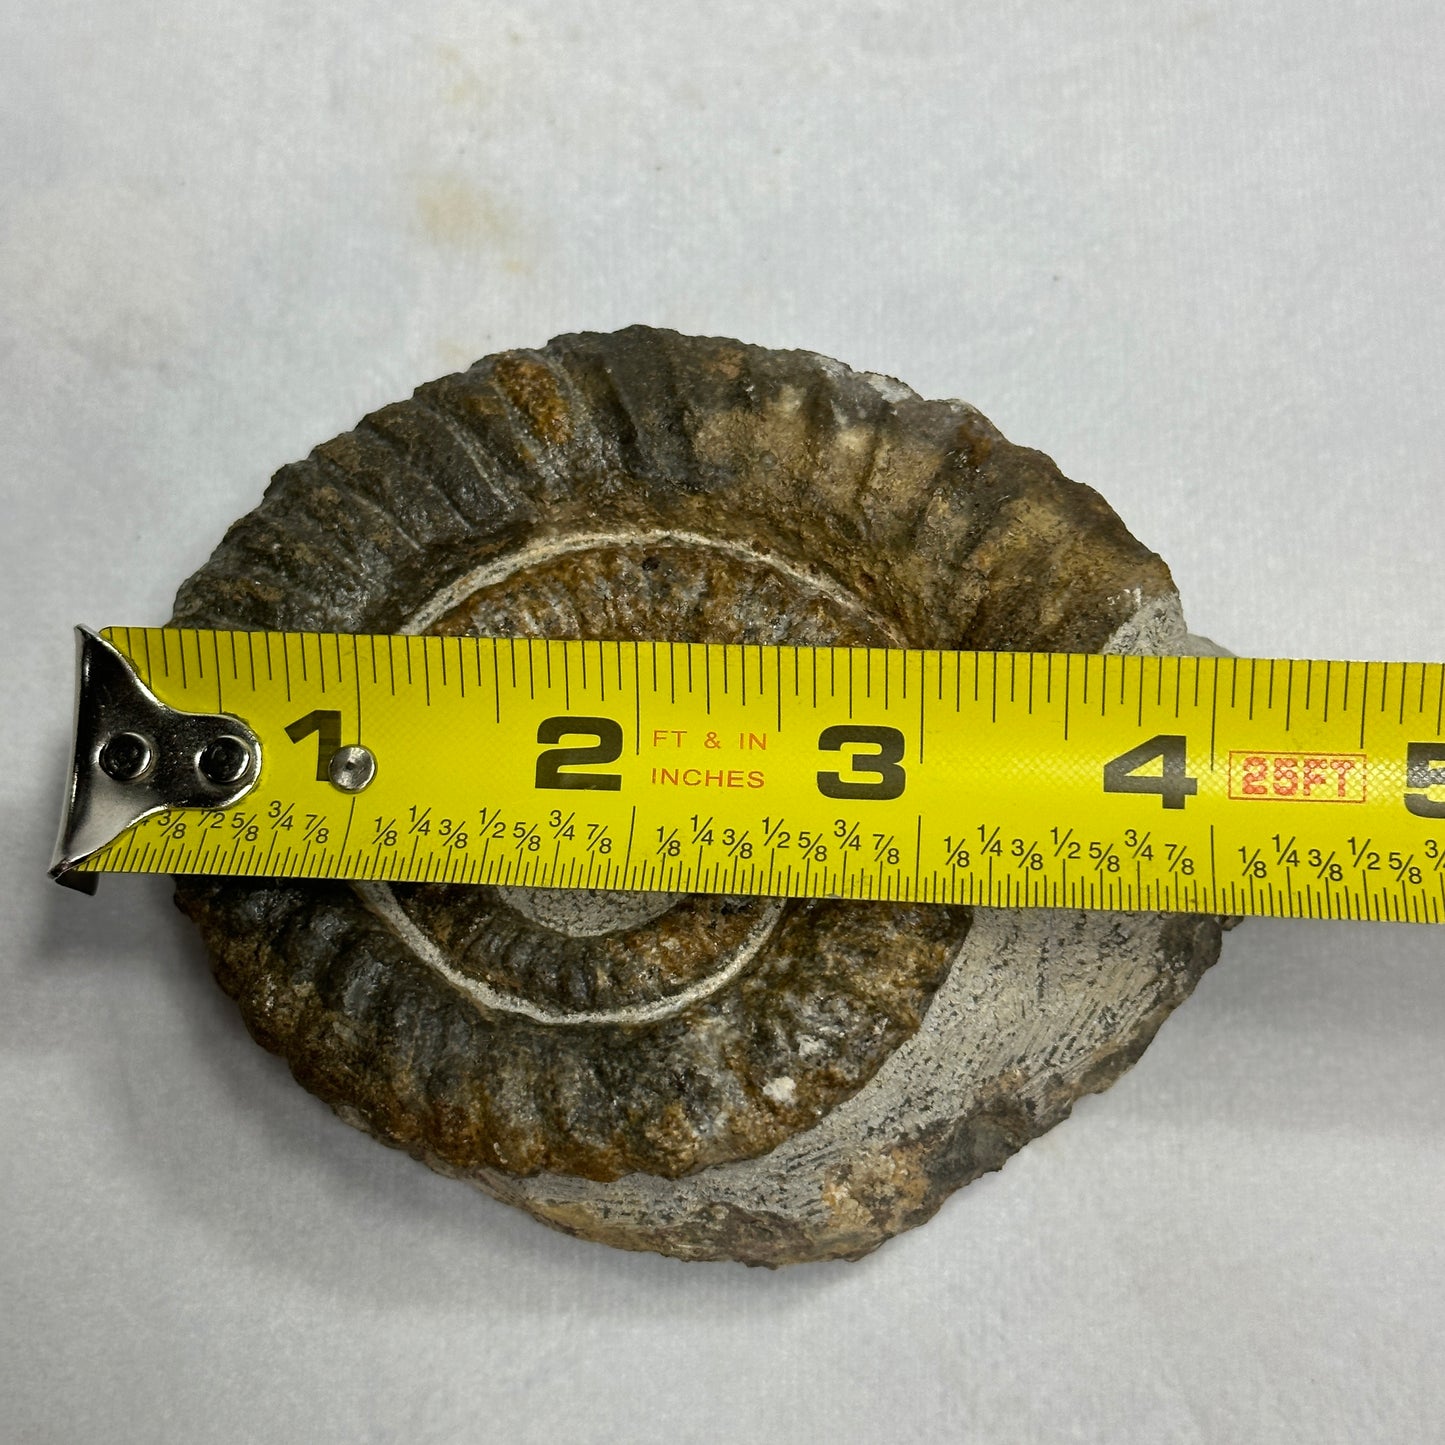 Detailed Anetoceras Heteromorph Ammonite